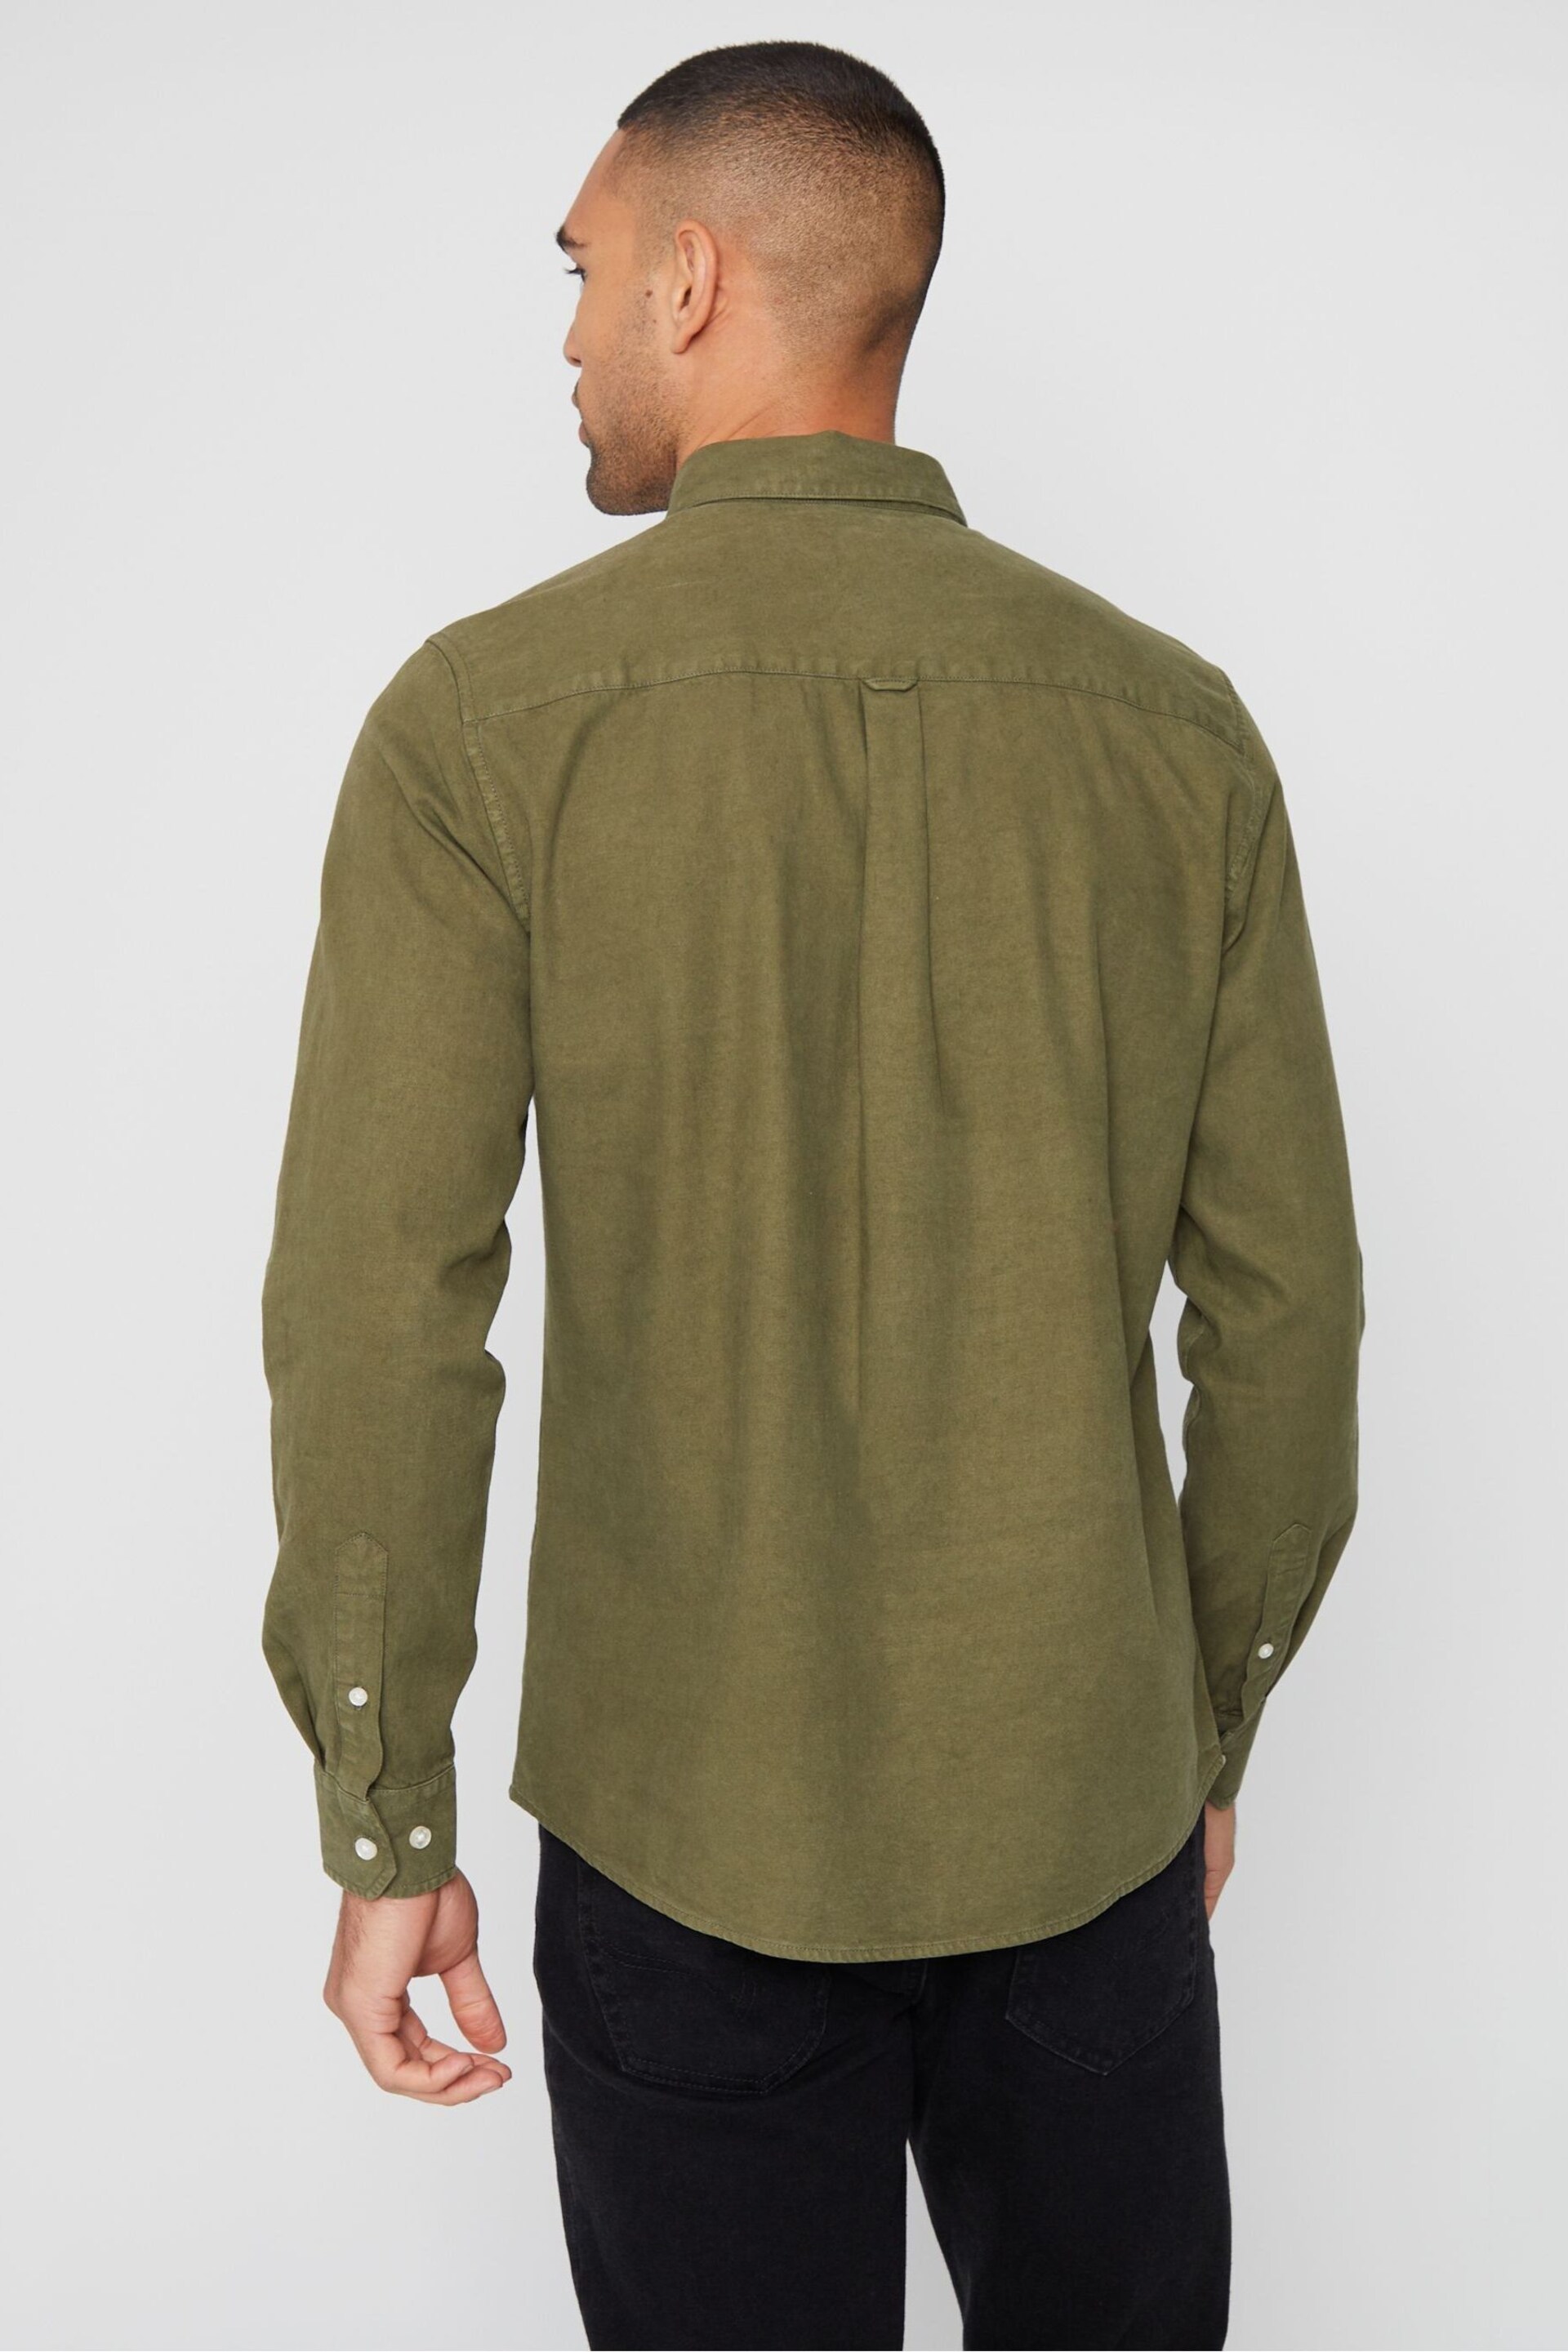 Threadbare Khaki Long Sleeve Soft Feel Cotton Blend Shirt - Image 2 of 5